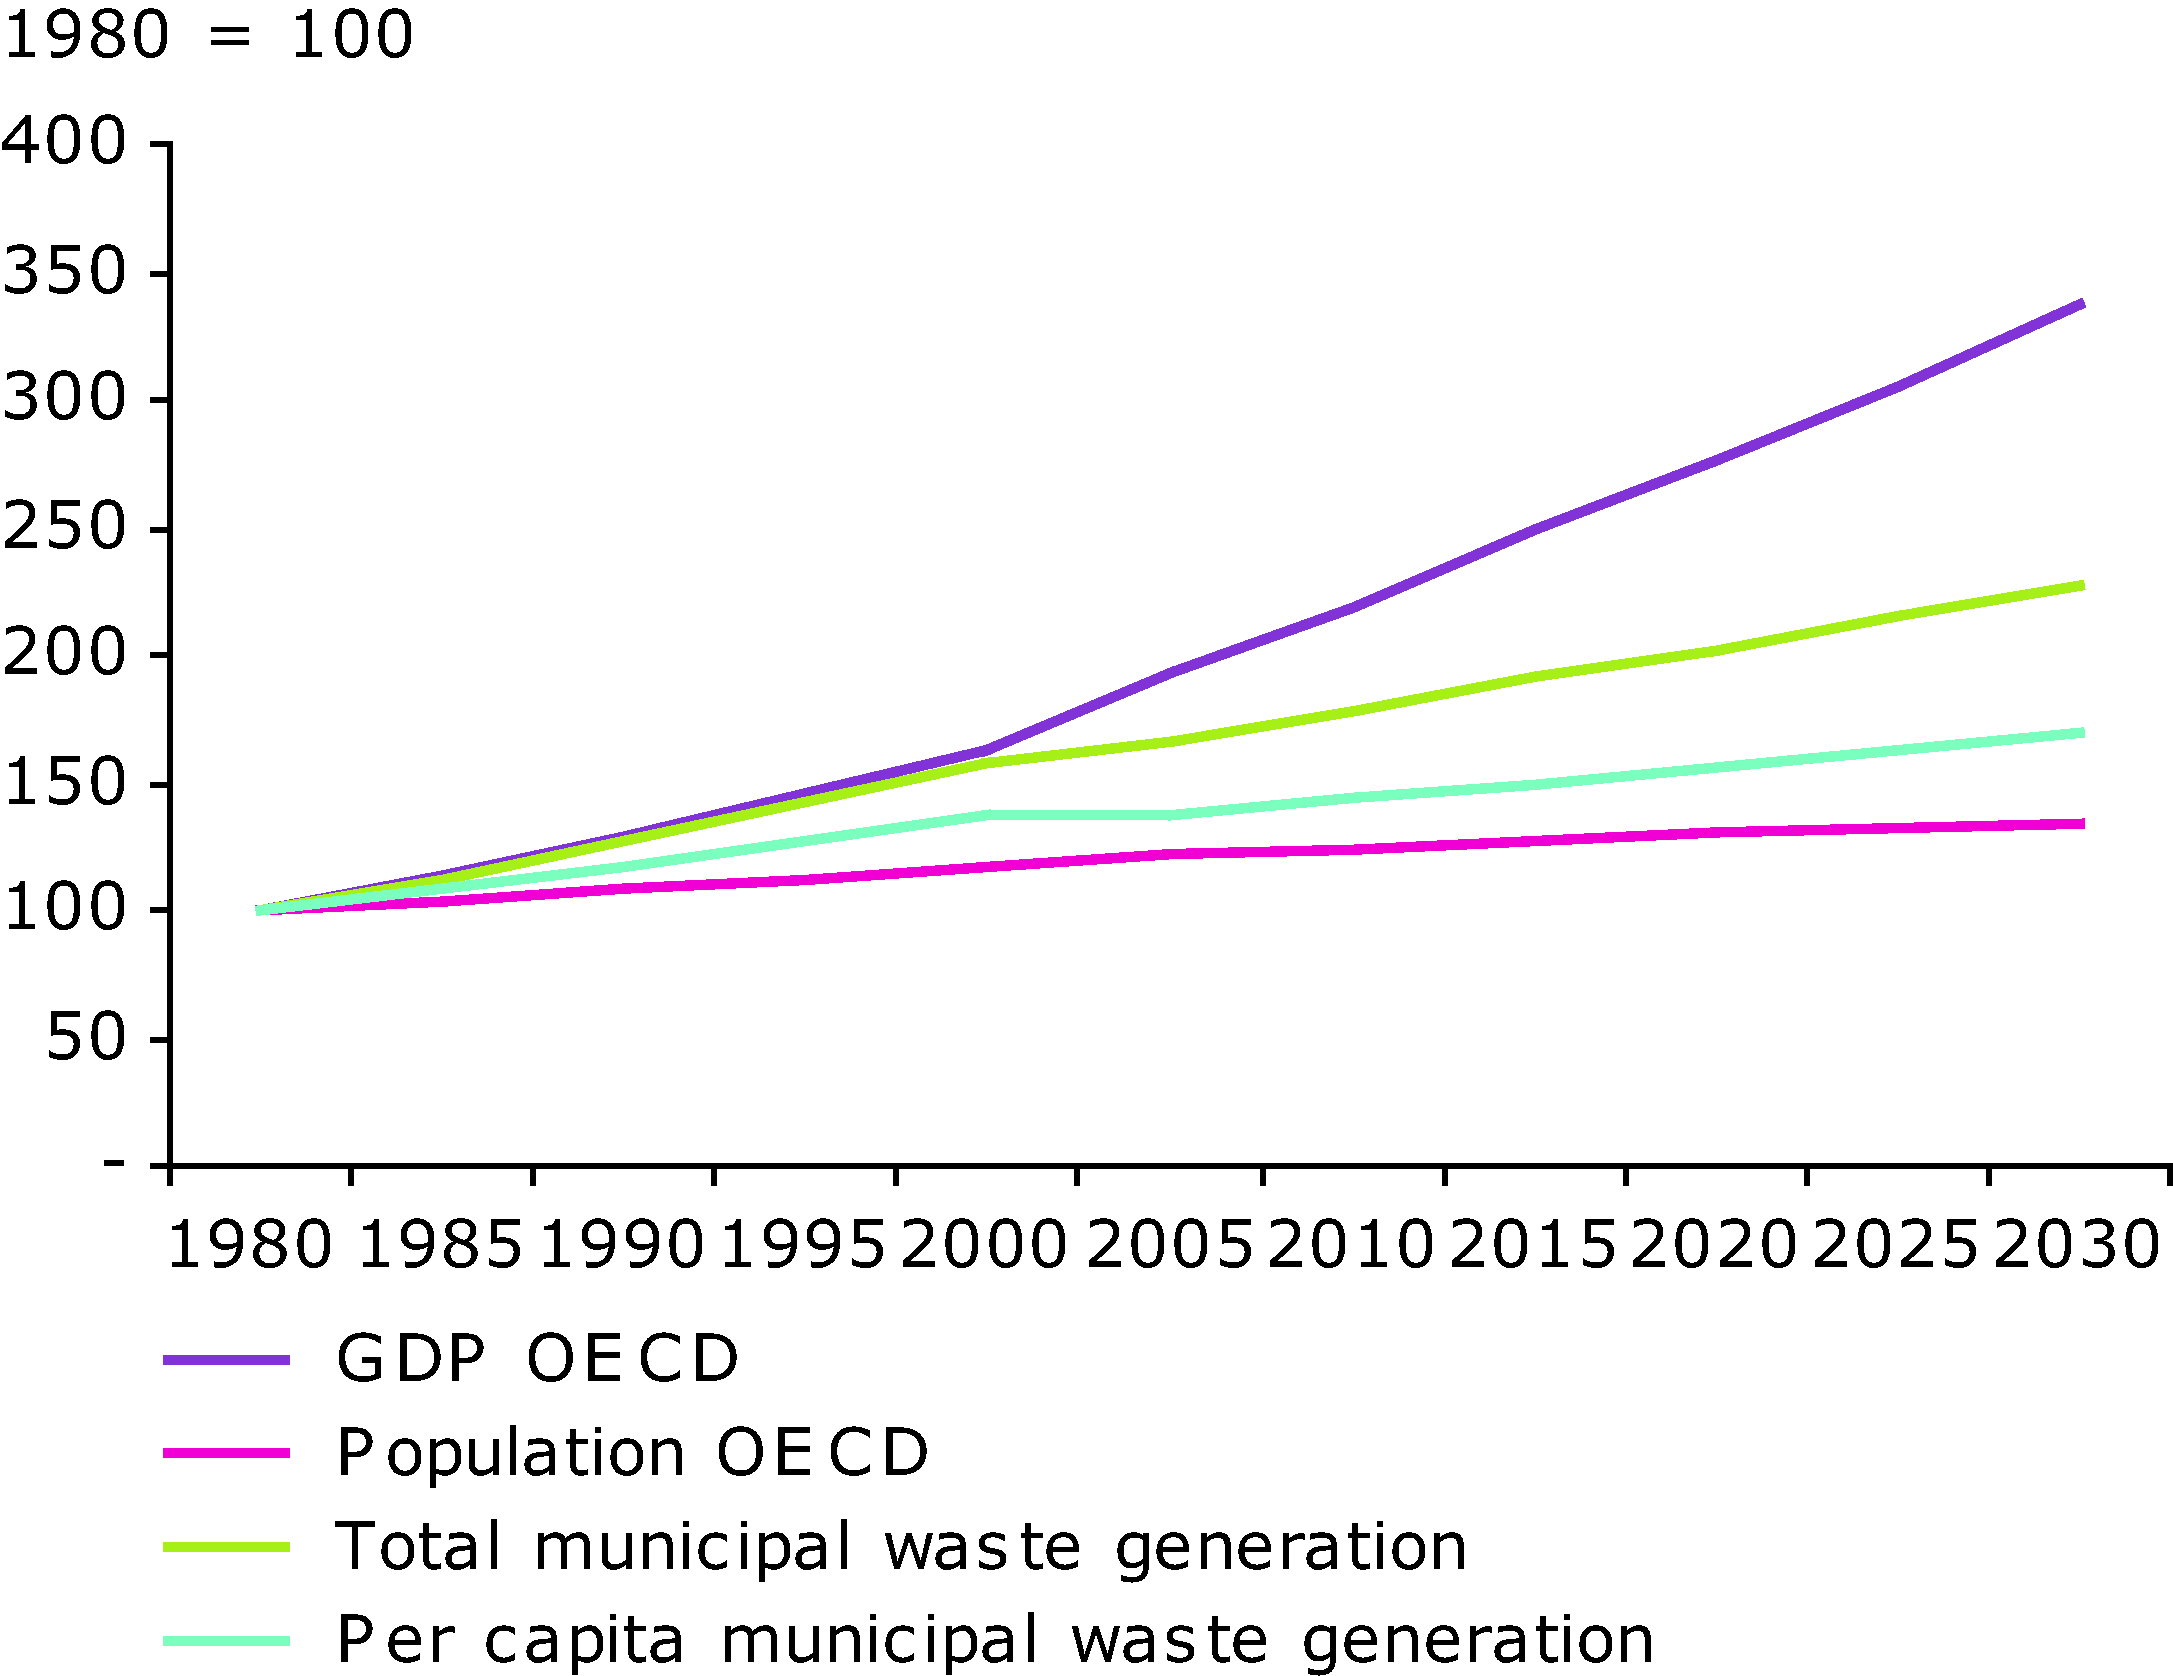 OECD country municipal waste generation, 1980-2030